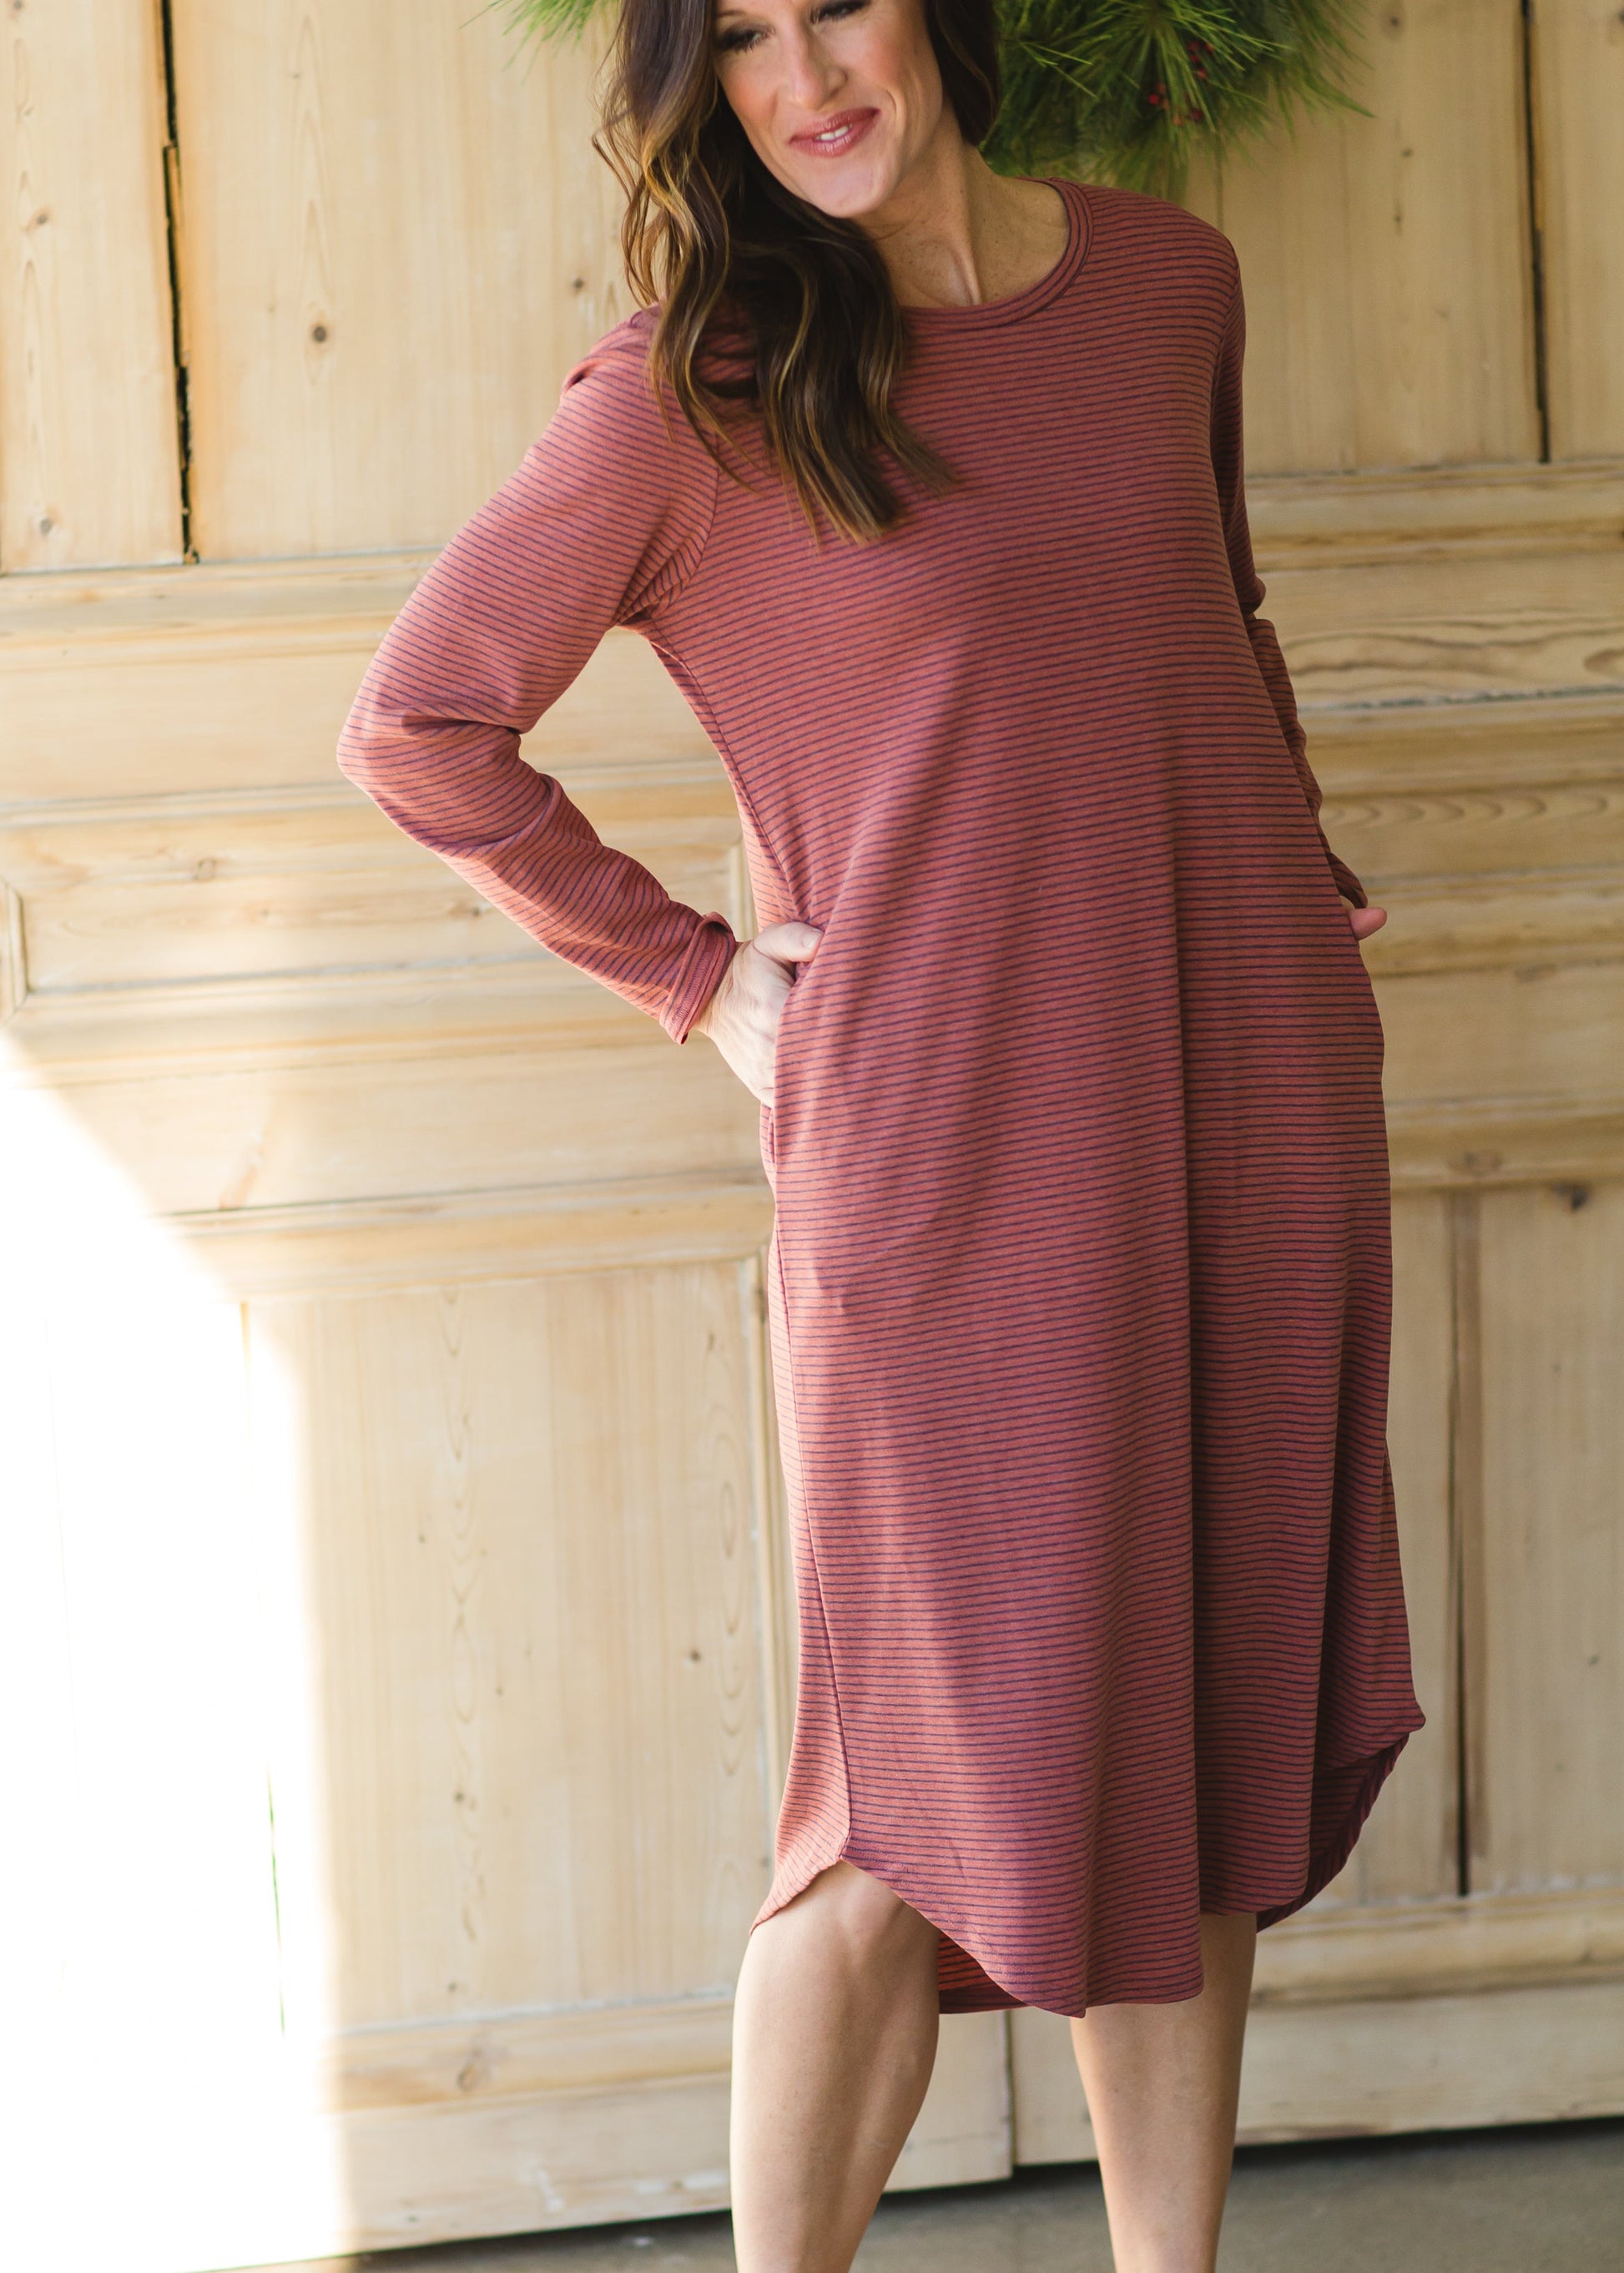 Burgundy Striped Long Sleeve Knit Dress - FINAL SALE Dresses